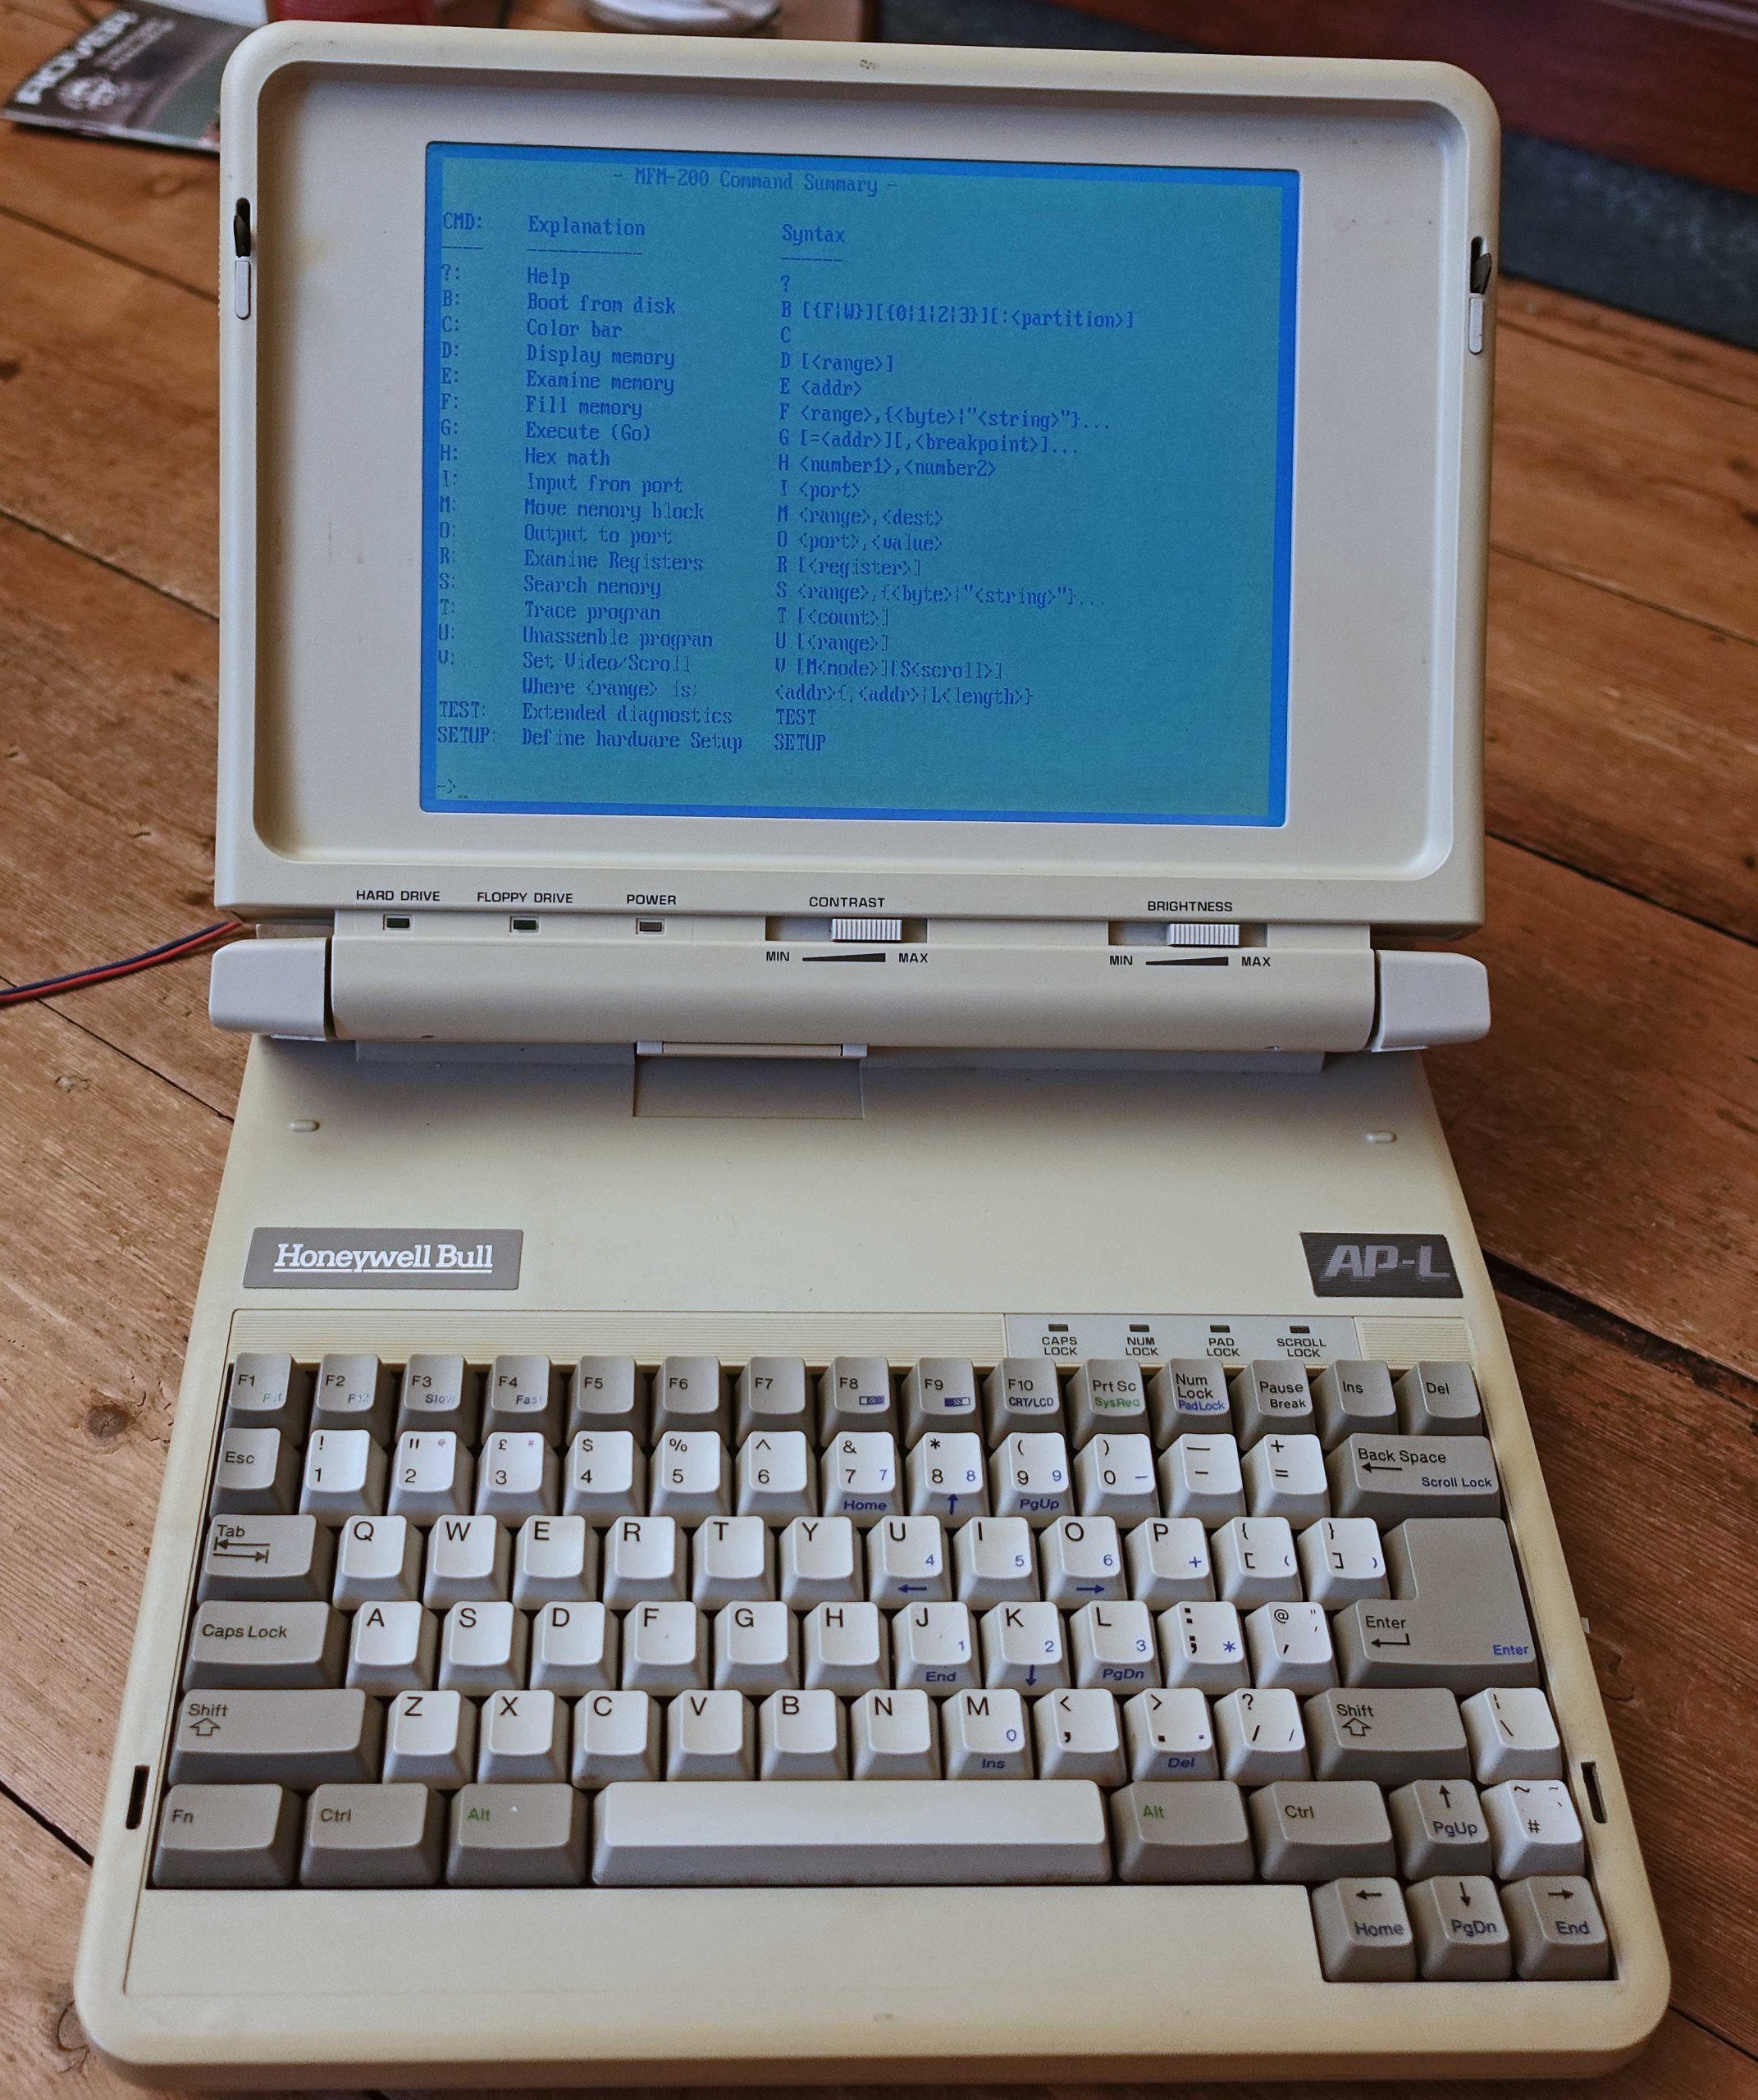 Honeywell Bull AP-L laptop, aka Zenith SuperSport 286